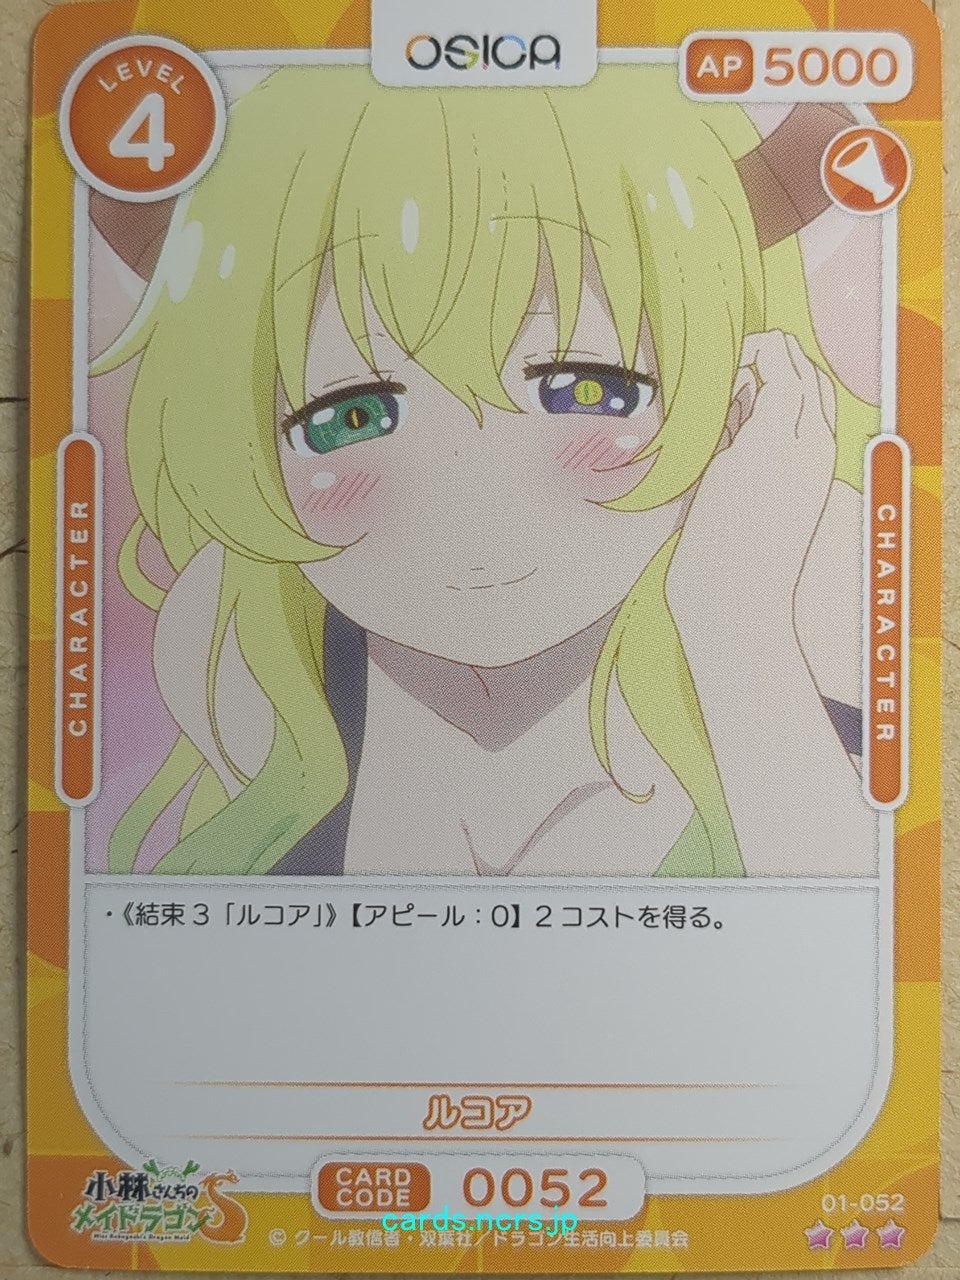 OSICA Miss Kobayashi's Dragon Maid -Lucoa-   Trading Card OS/KOB-01-052